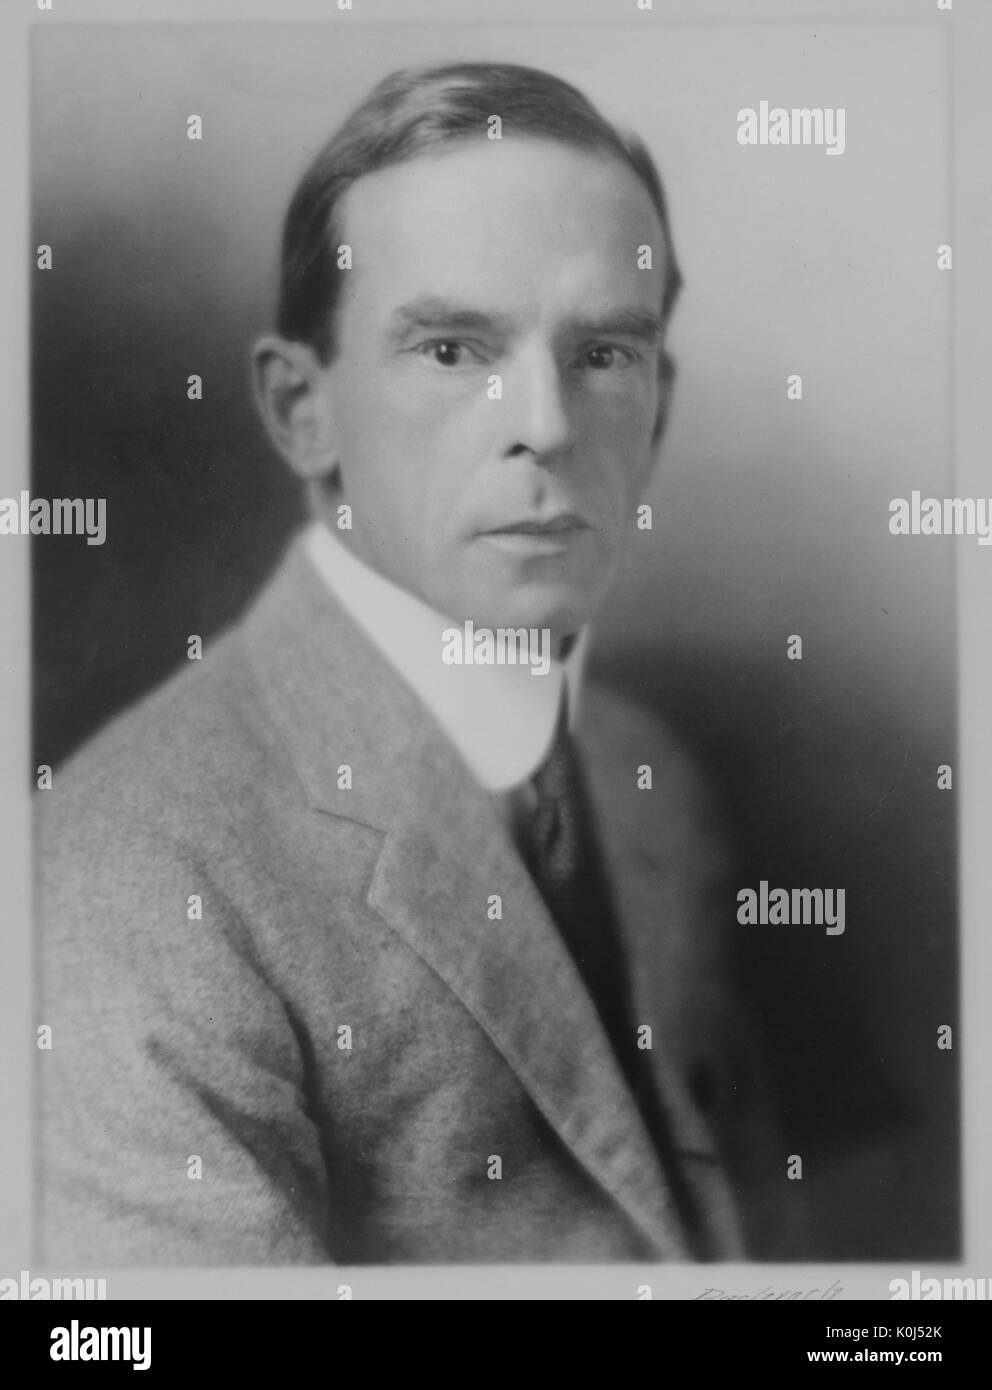 Seated headshot portrait of Robert Bruce Roulston, professor of German at The Johns Hopkins University. 1922. Stock Photo